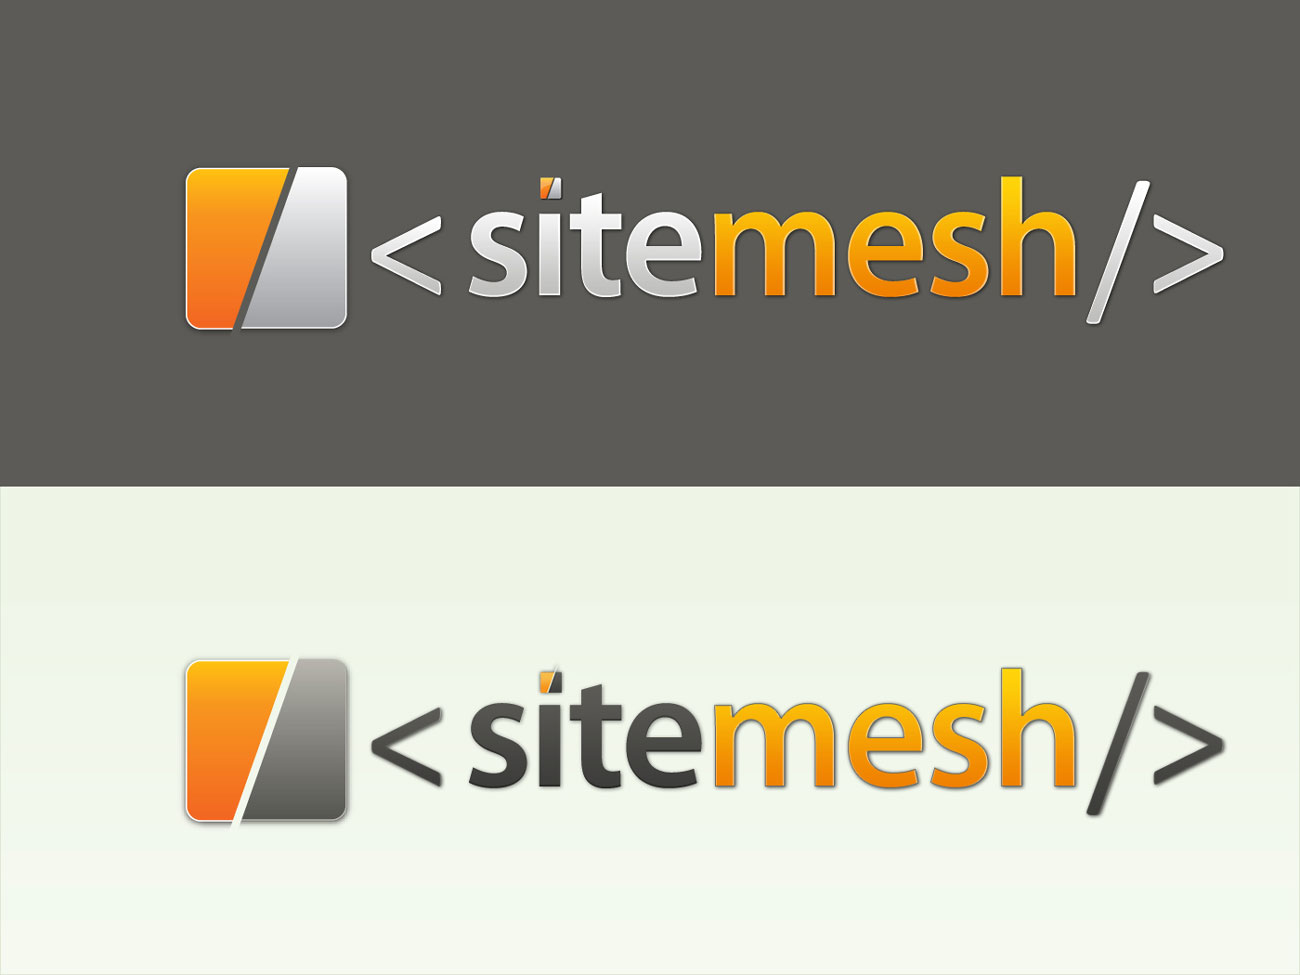 Sitemesh logo